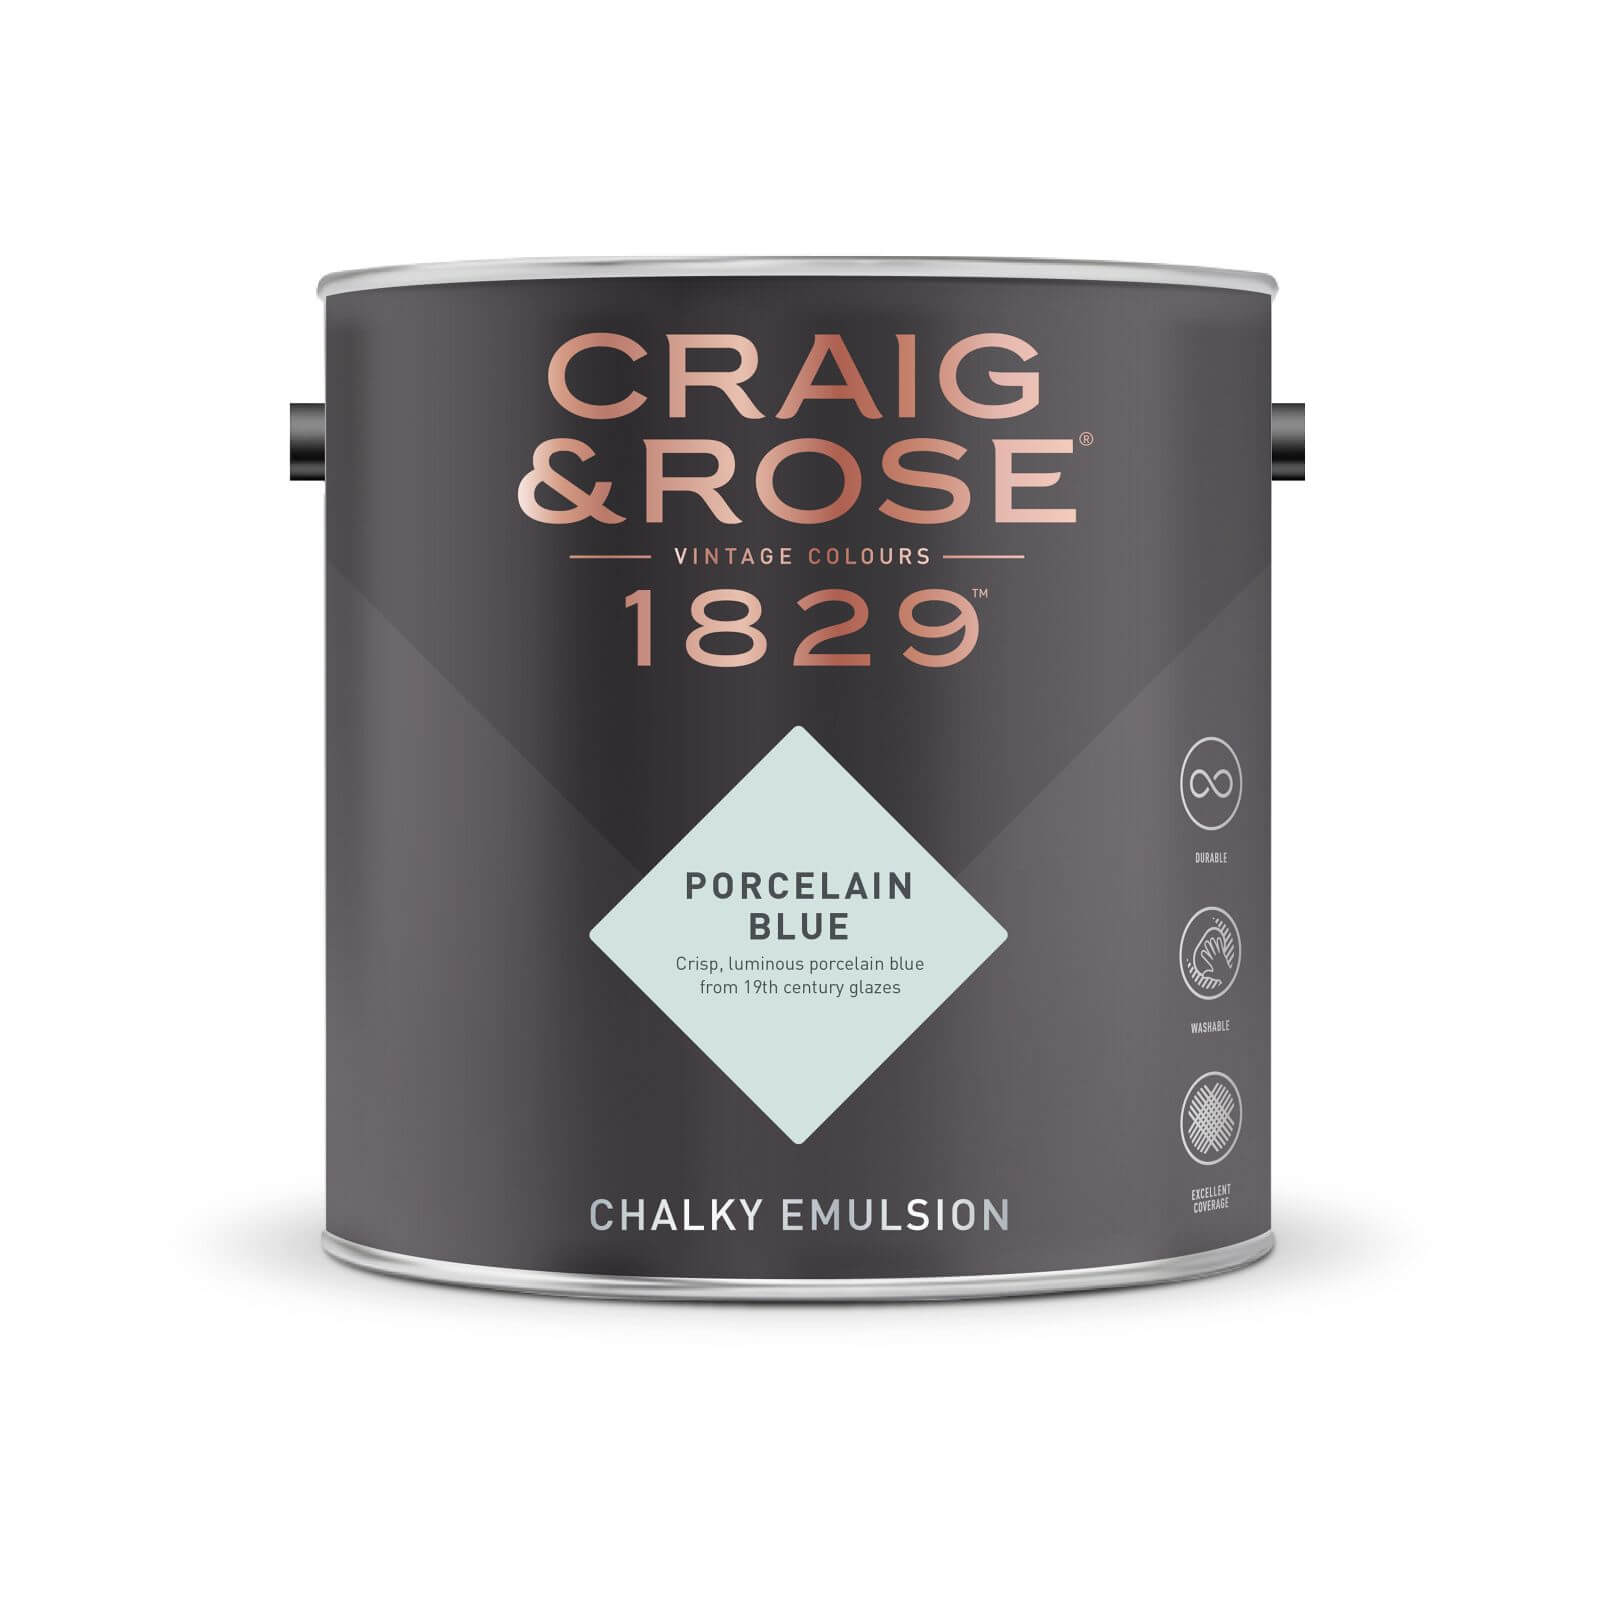 Craig & Rose 1829 Chalky Emulsion Paint Porcelain Blue - Tester 50ml